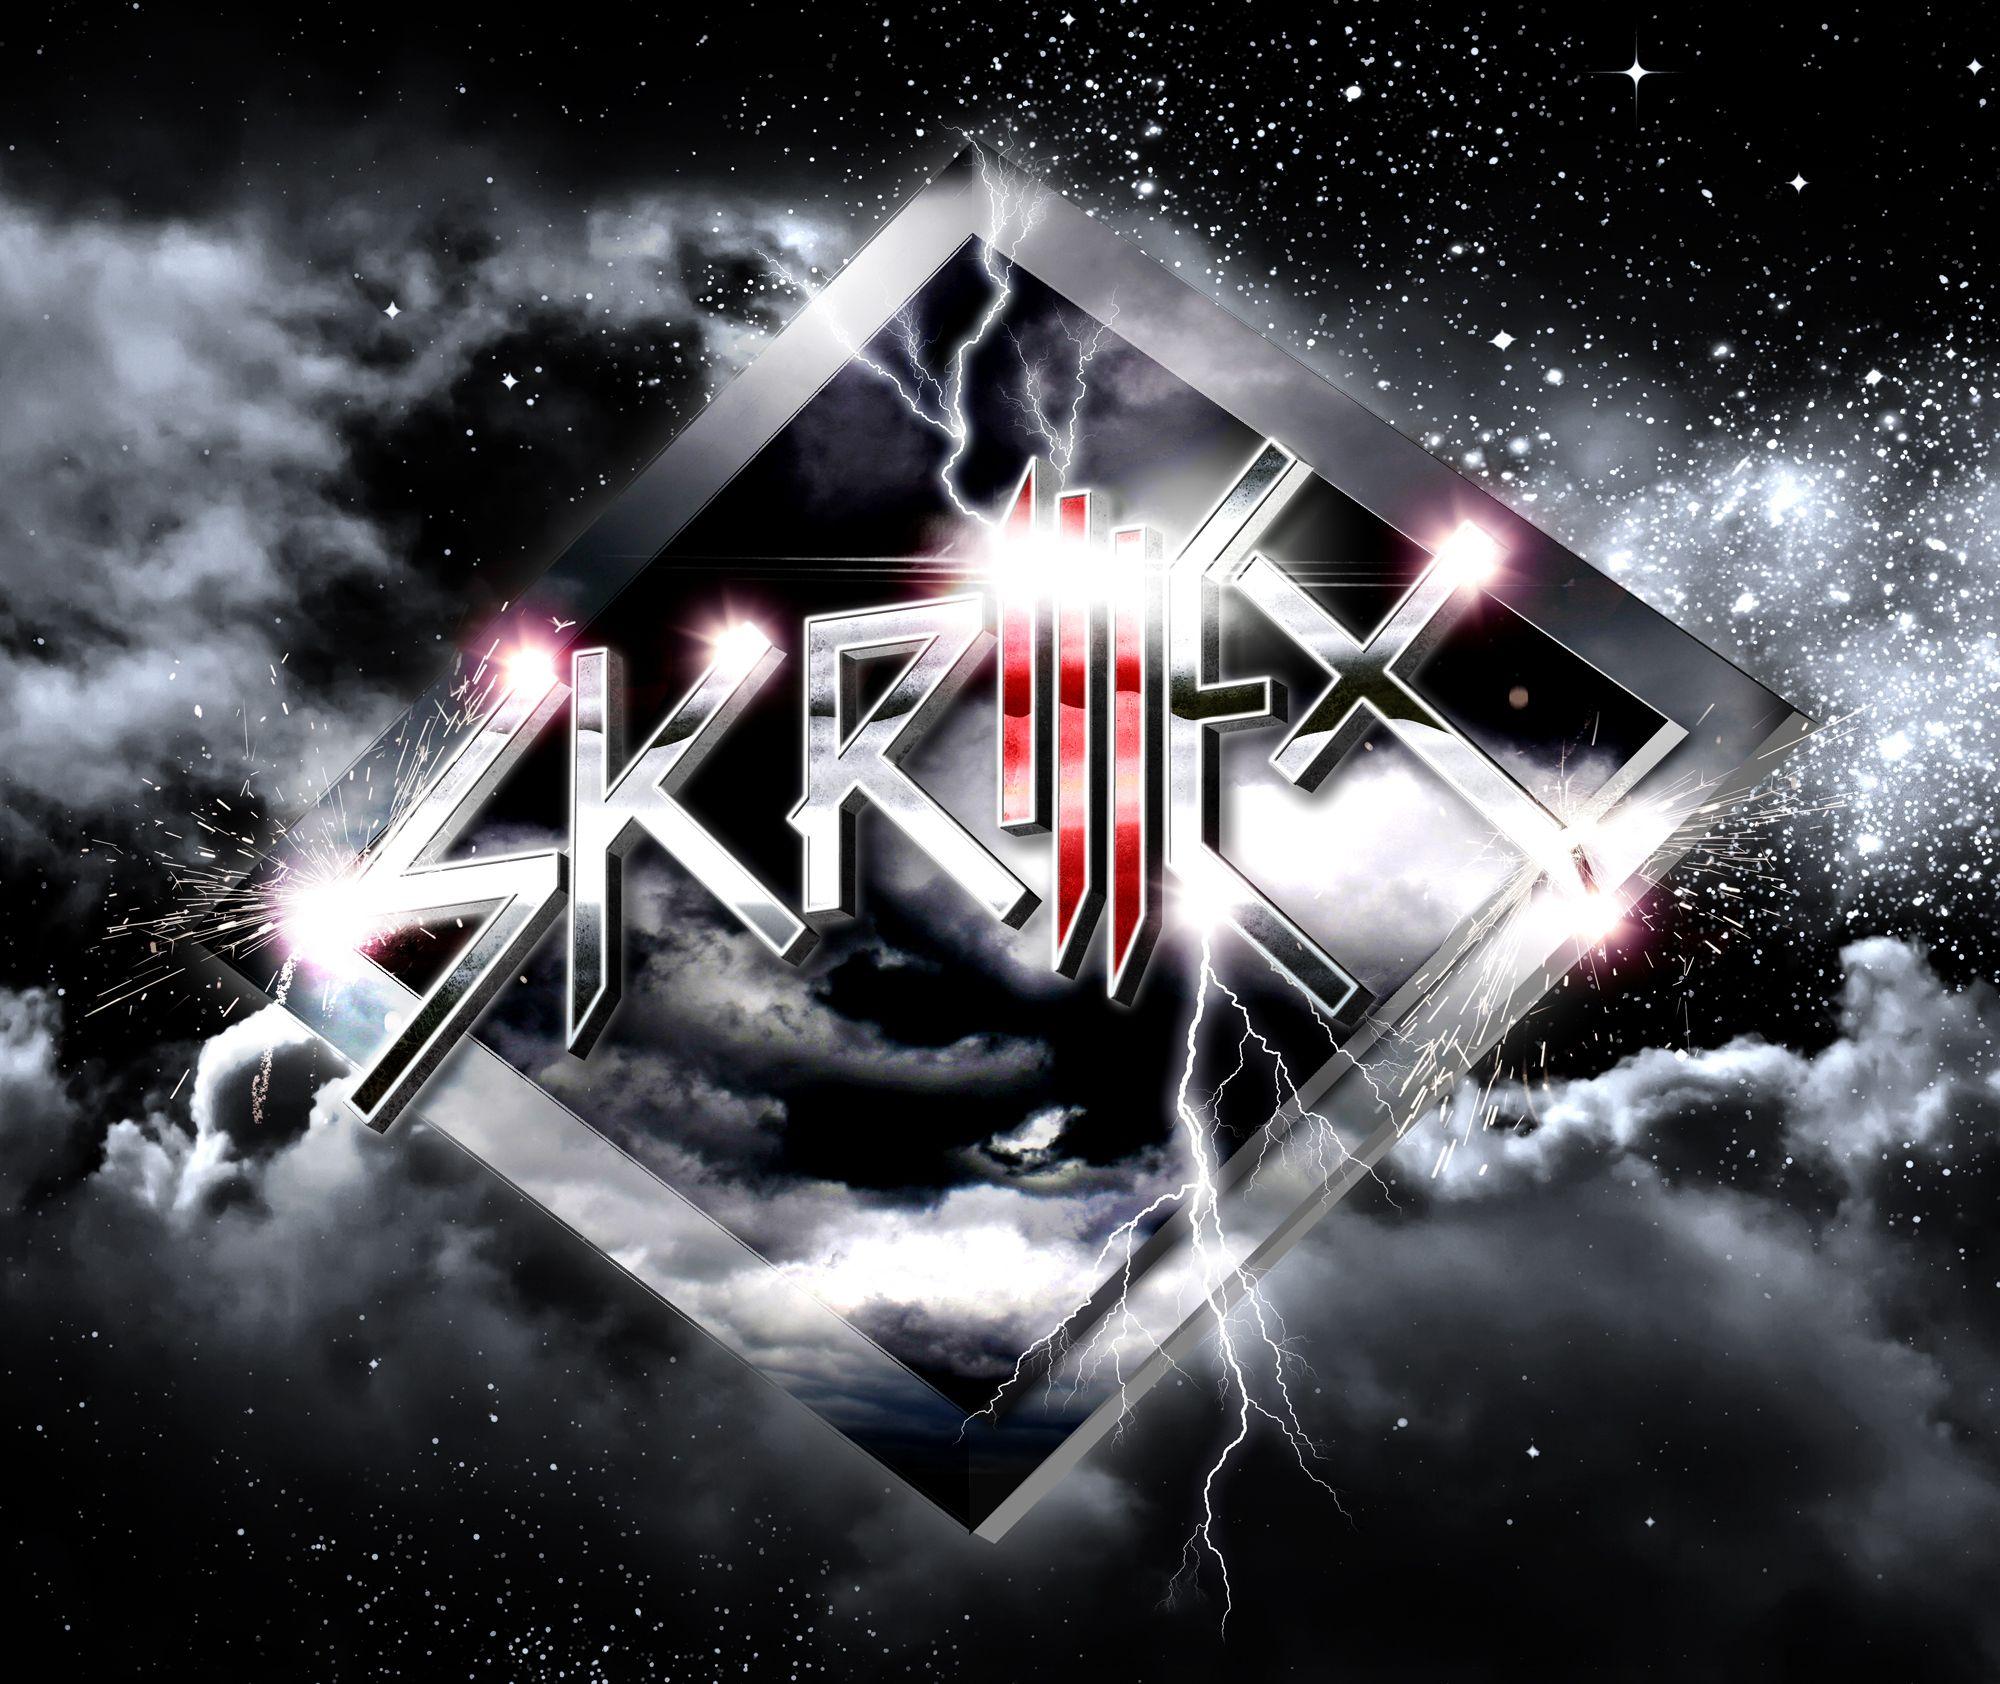 Cool Remix Logo - Image - Skrillex Logo.jpg | Really Cool Things Wiki | FANDOM powered ...